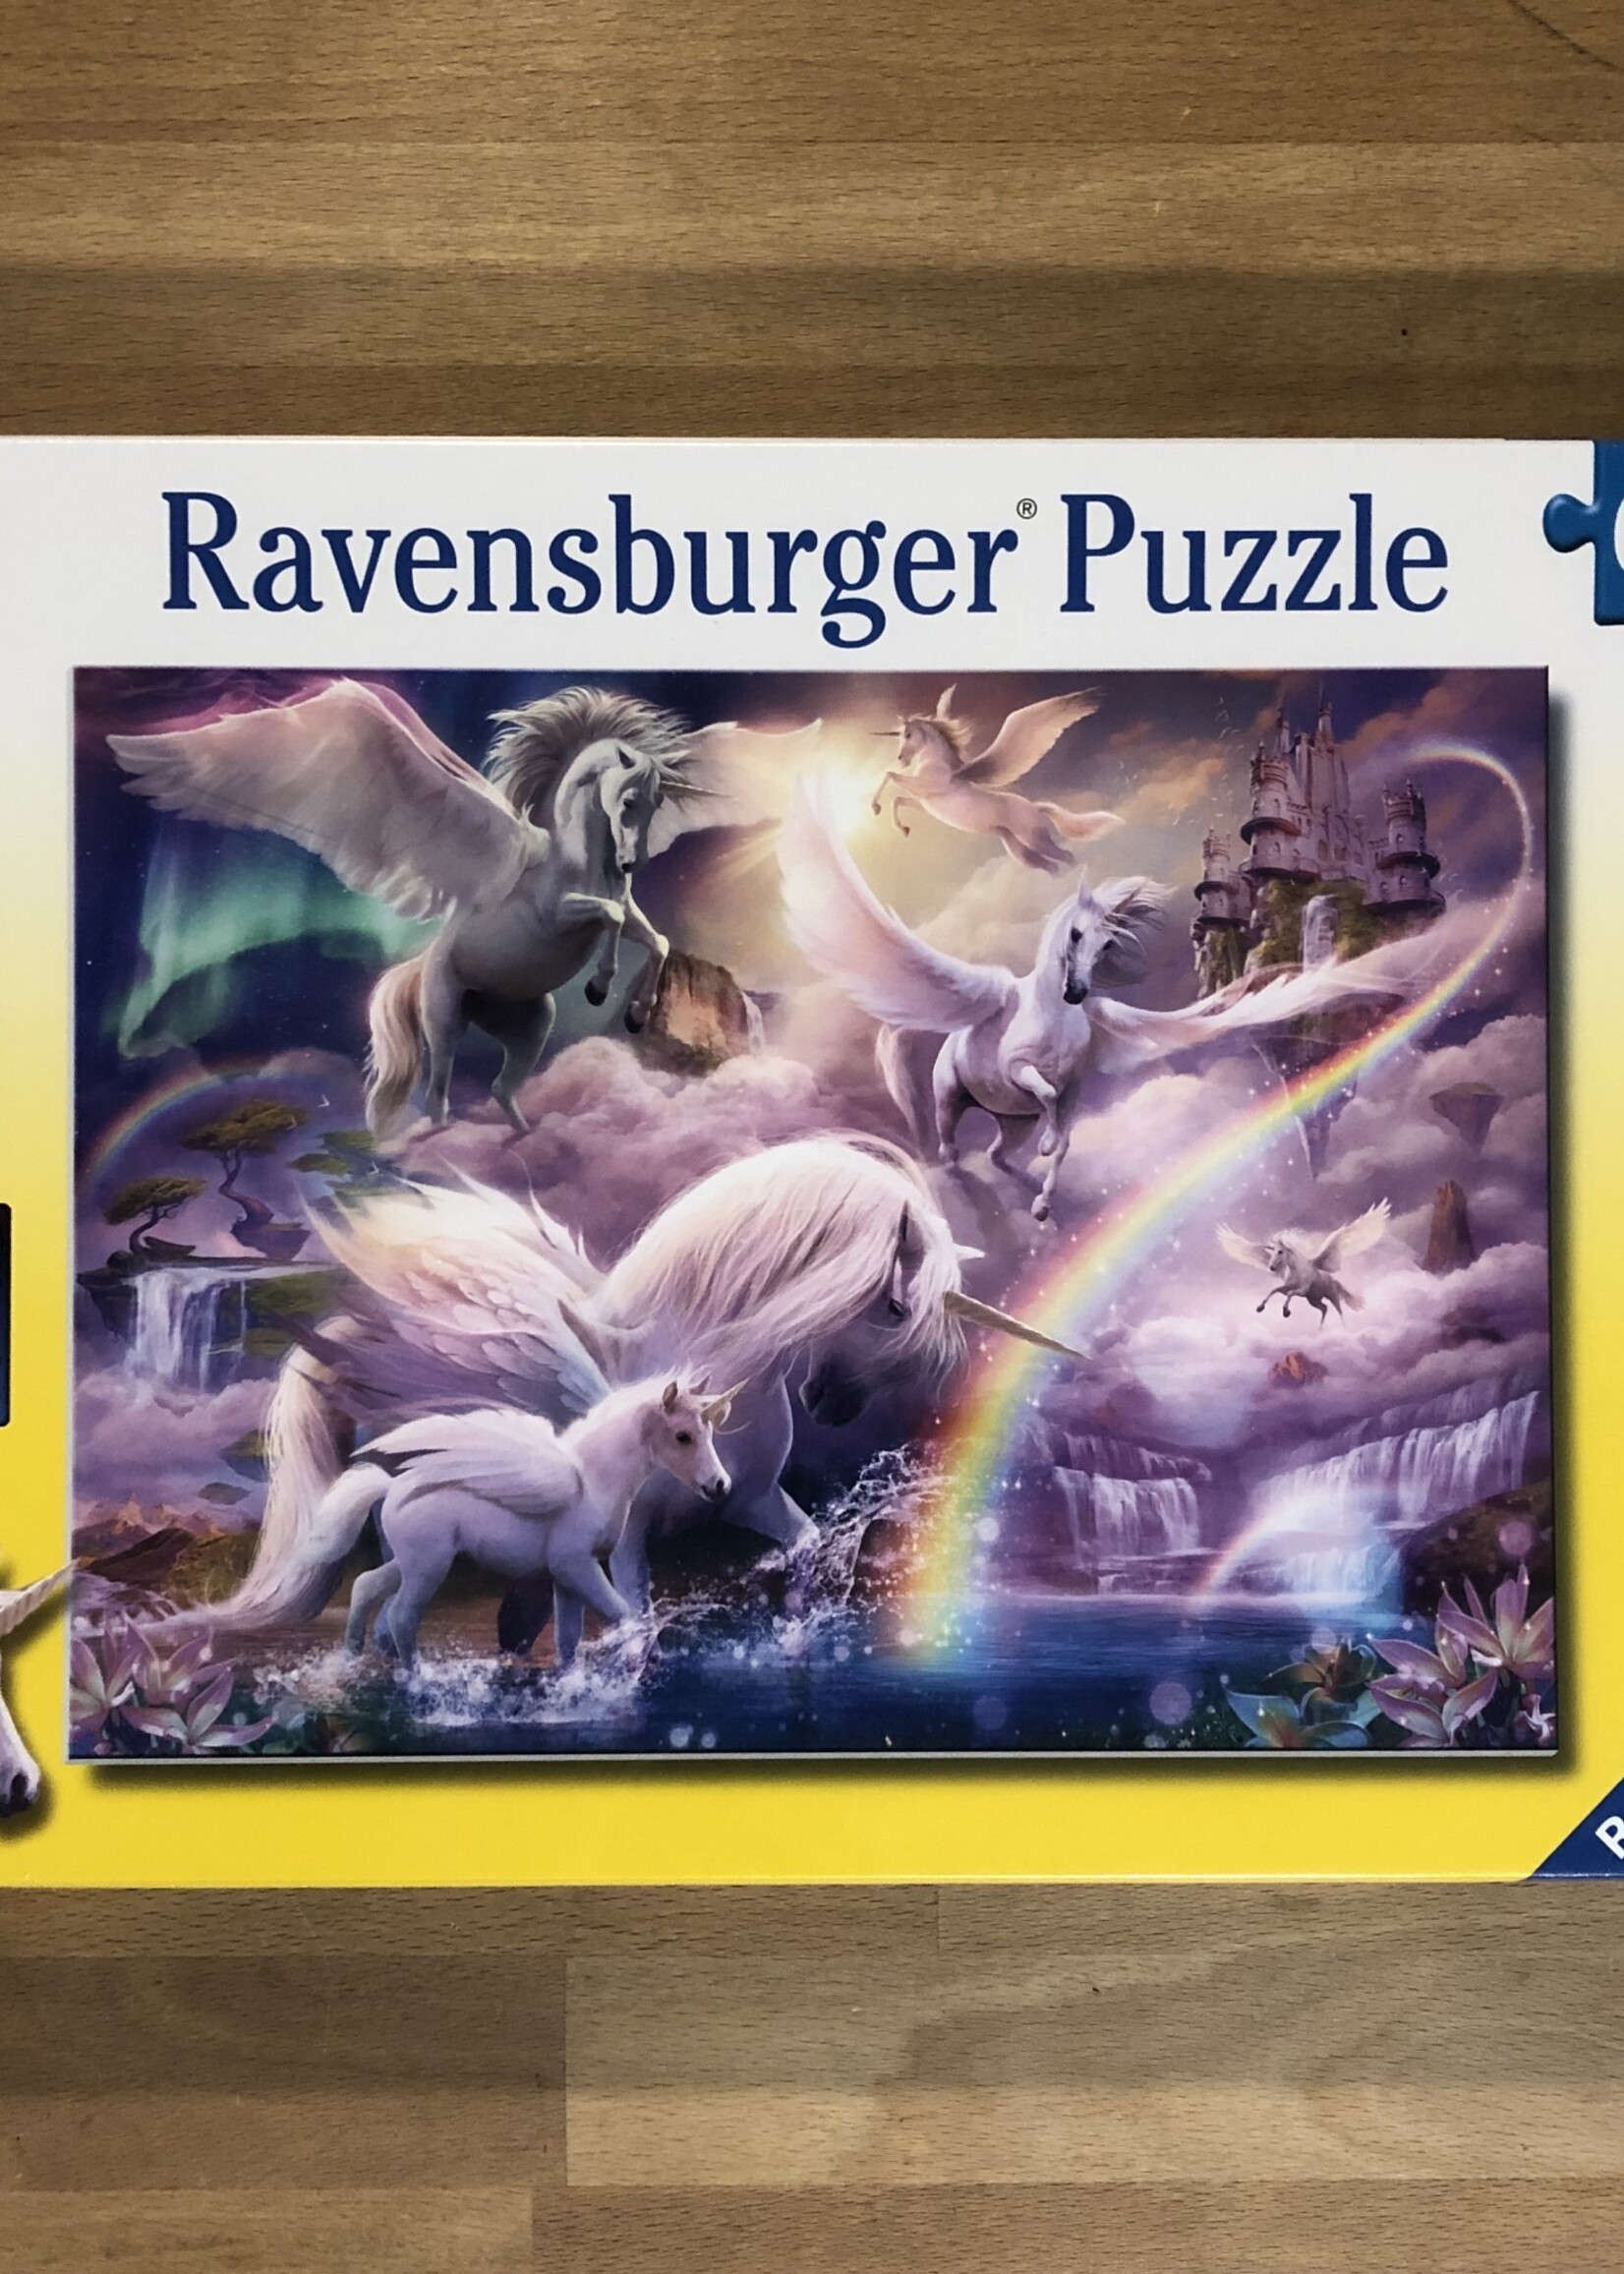 Ravensburger Puzzle - Pegasus Unicorns 100 Pc.